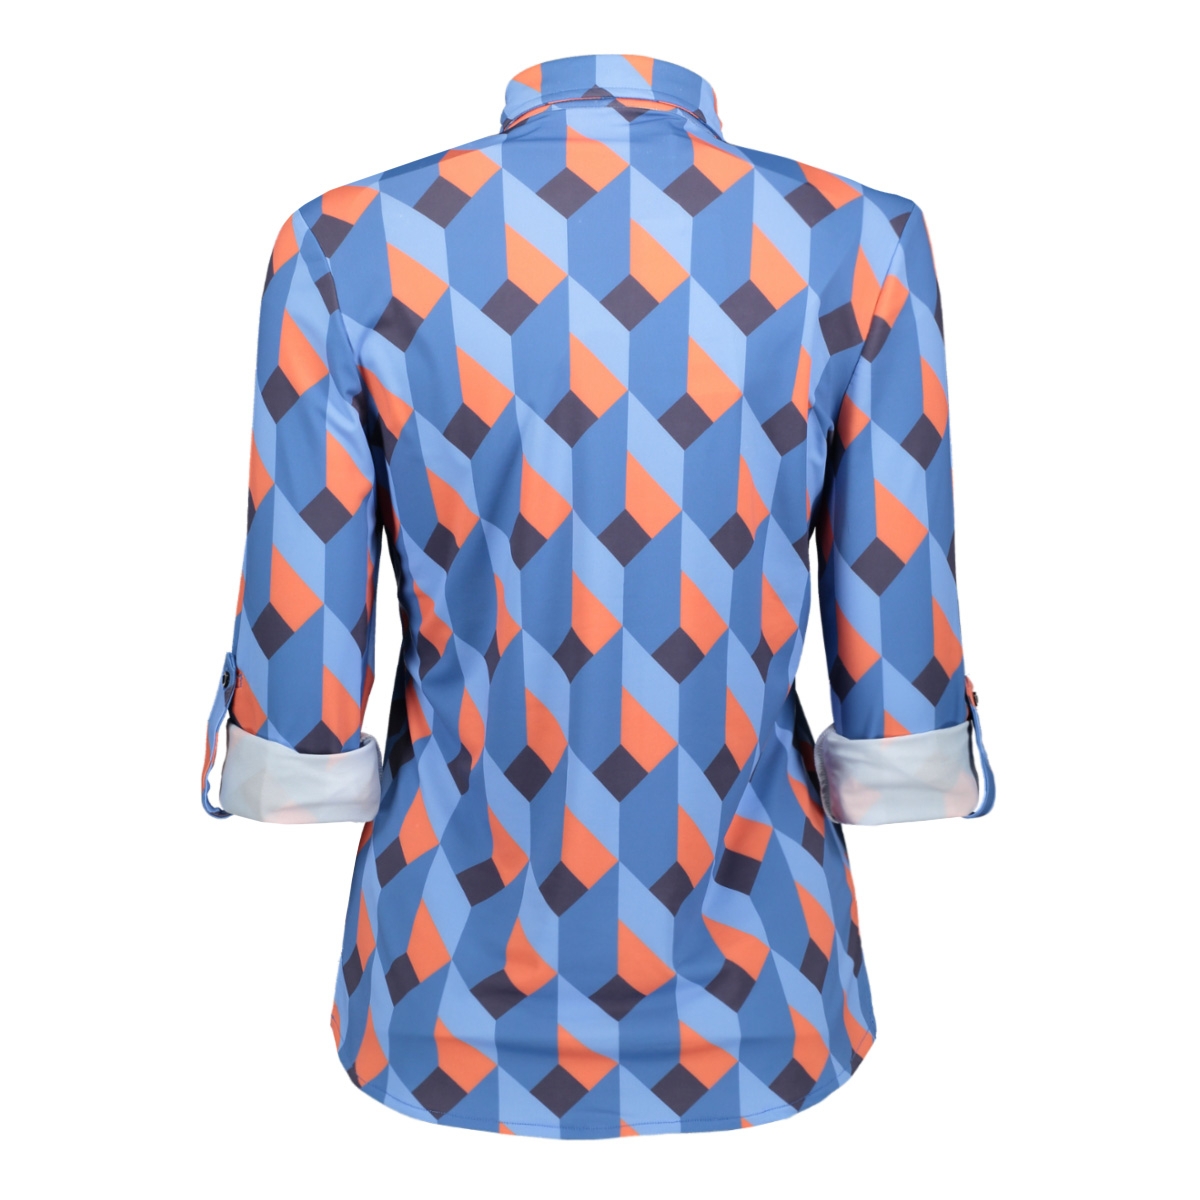 bianca printed blouse 194 zoso blouse blue/orange